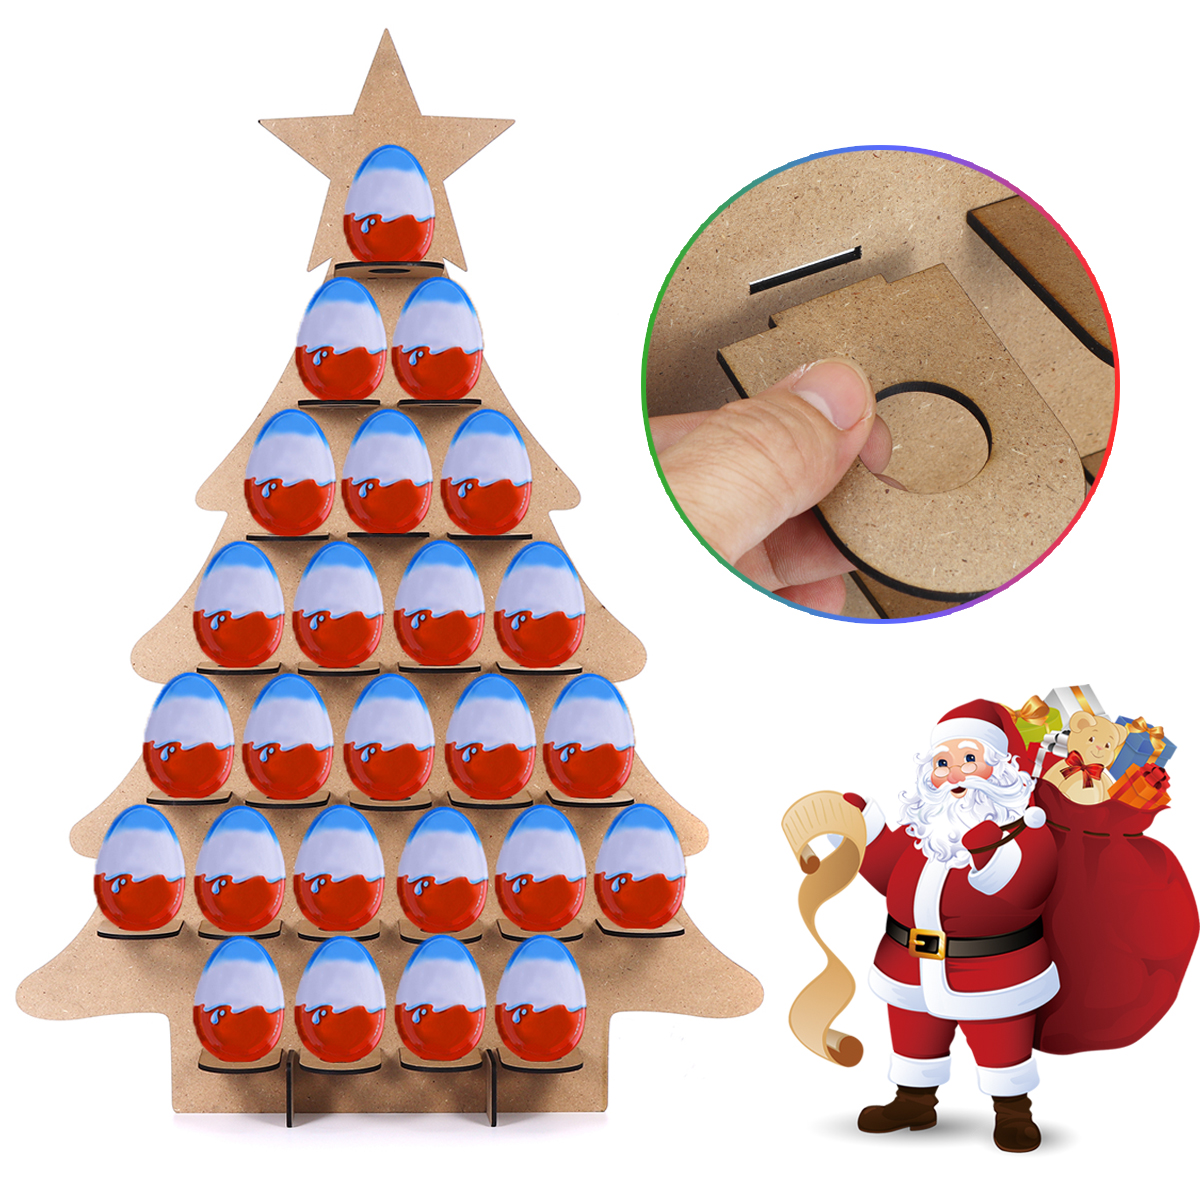 Wooden-Family-Advent-Calendar-Christmas-Tree-25-Chocolates-Stand-Rack-DIY-Decorations-1458960-1